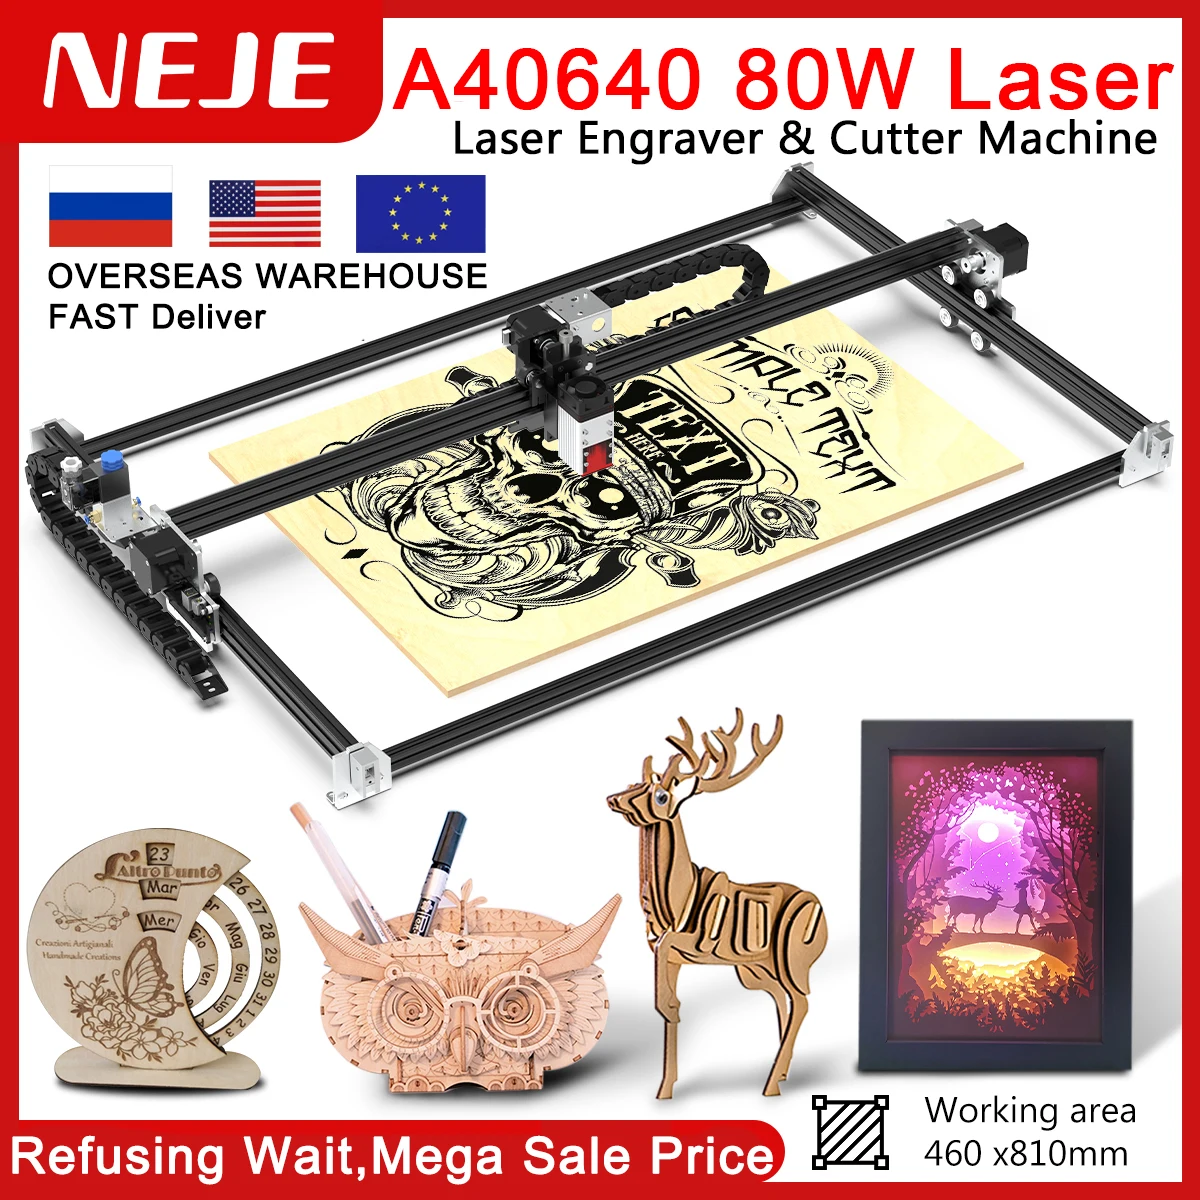 NEJE 3 MAX Laser Engraving Machine CNC Router A40640 80W Lightburn LaserGRBL APP Control  Cutter Laser Engraver DIY steel Wood